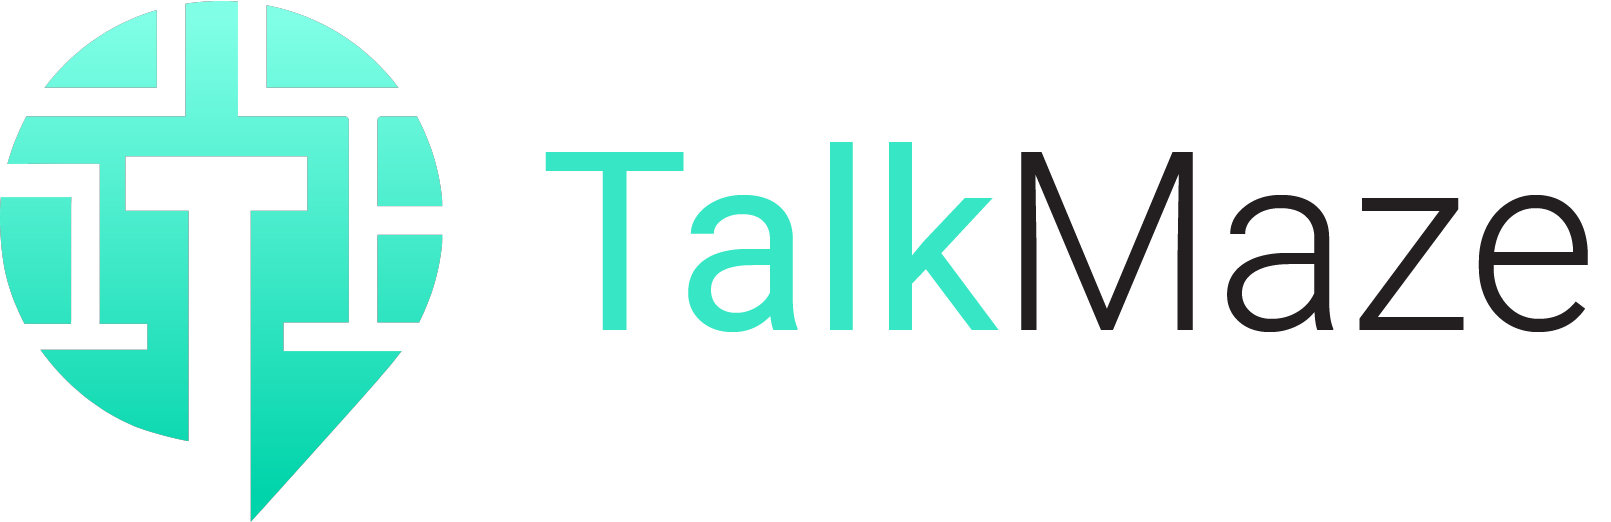 TalkMaze Full Logo